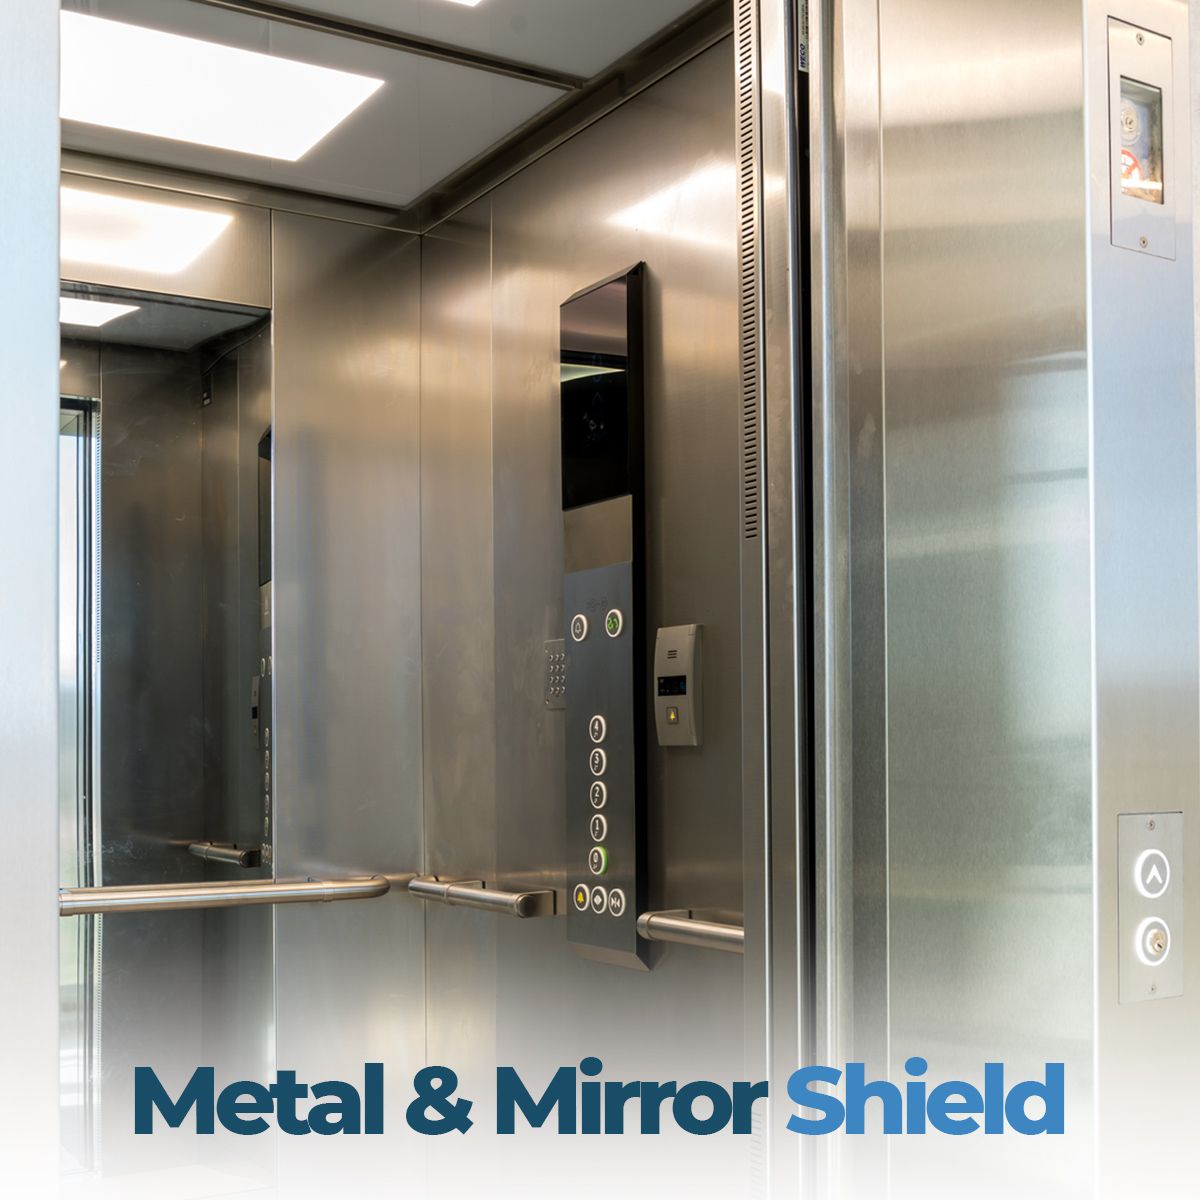 Metal & Mirror Shield